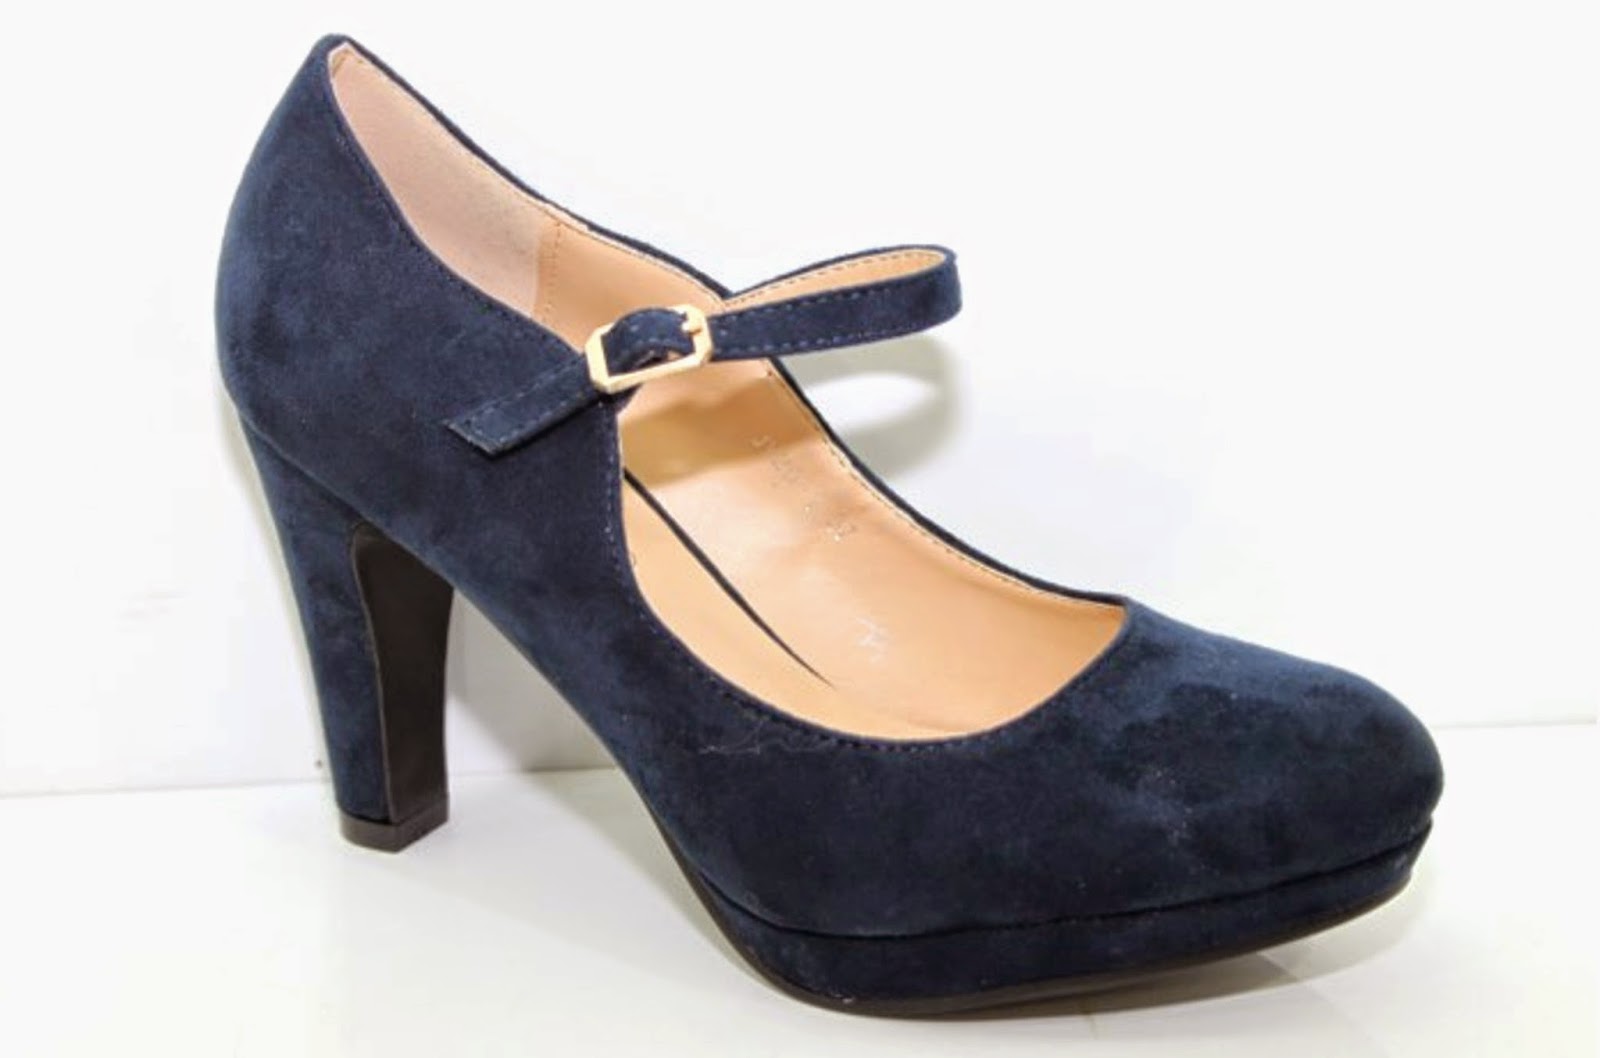 http://www.ebay.fr/itm/chaussures-femme-escarpins-bride-daim-bleu-marron-taupe-noir-36-37-38-39-40-41-/301472782744?ssPageName=STRK:MESE:IT